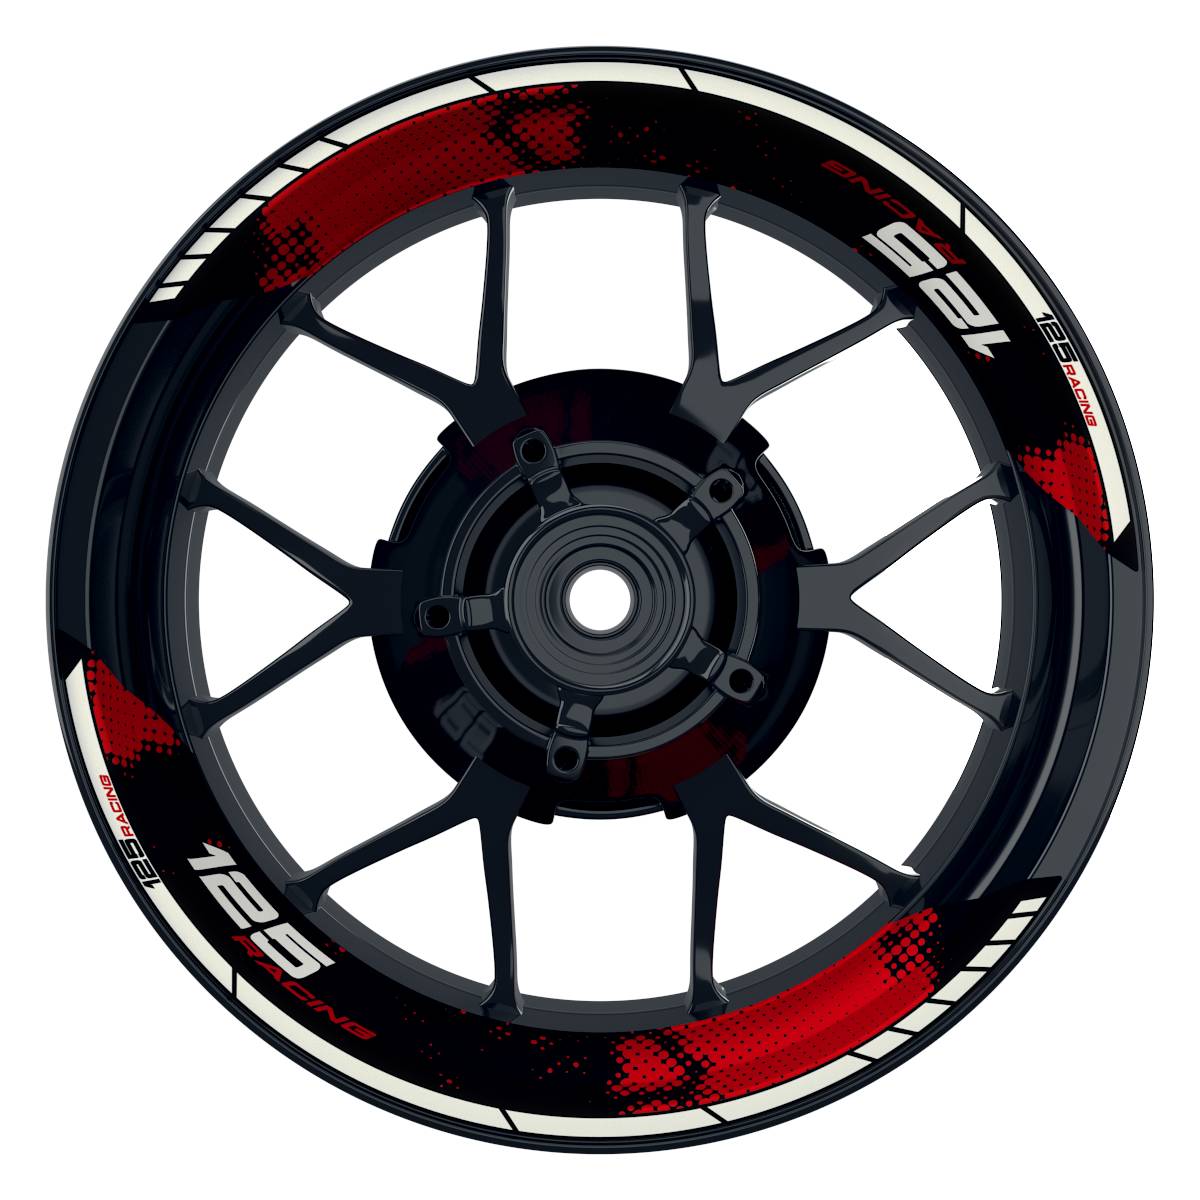 KTM Racing 125 Dots schwarz rot Frontansicht